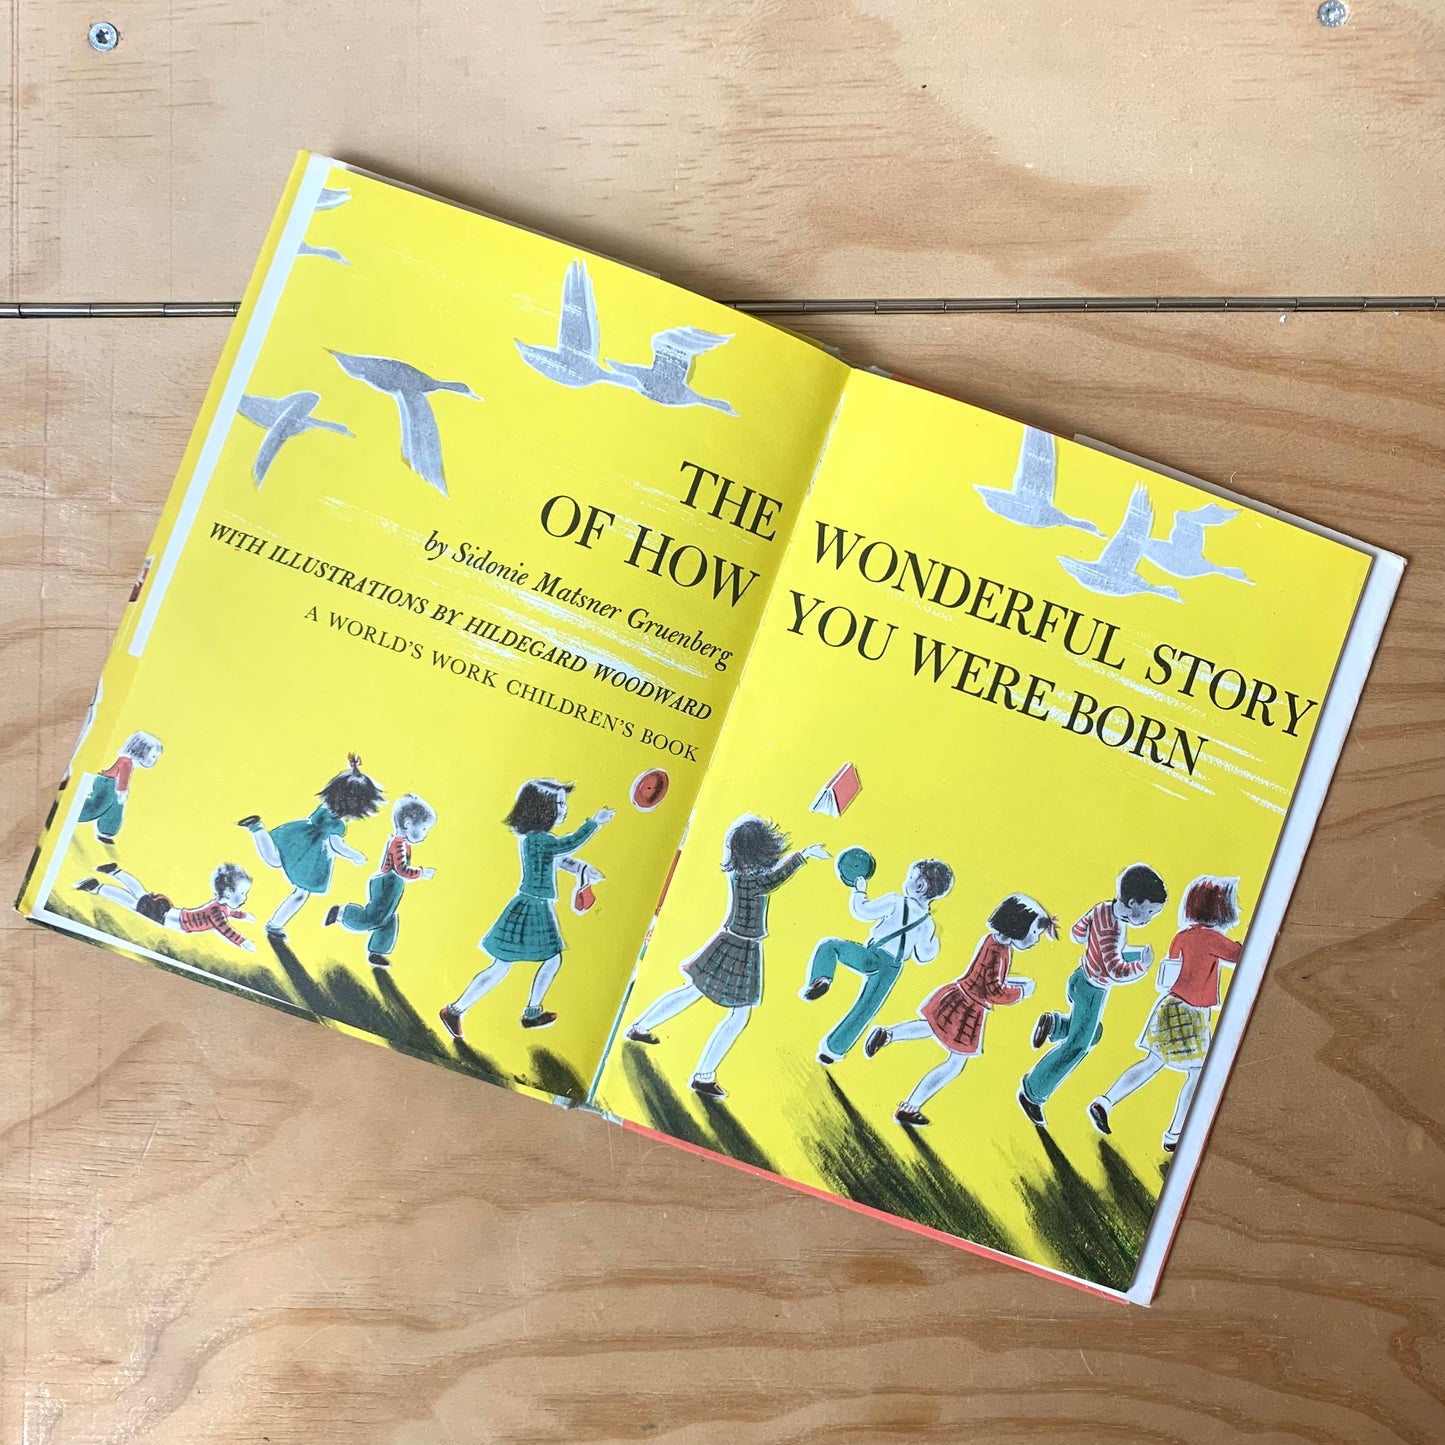 The Wonderful Story of How You Were Born – Sidonie Matsner Gruenberg